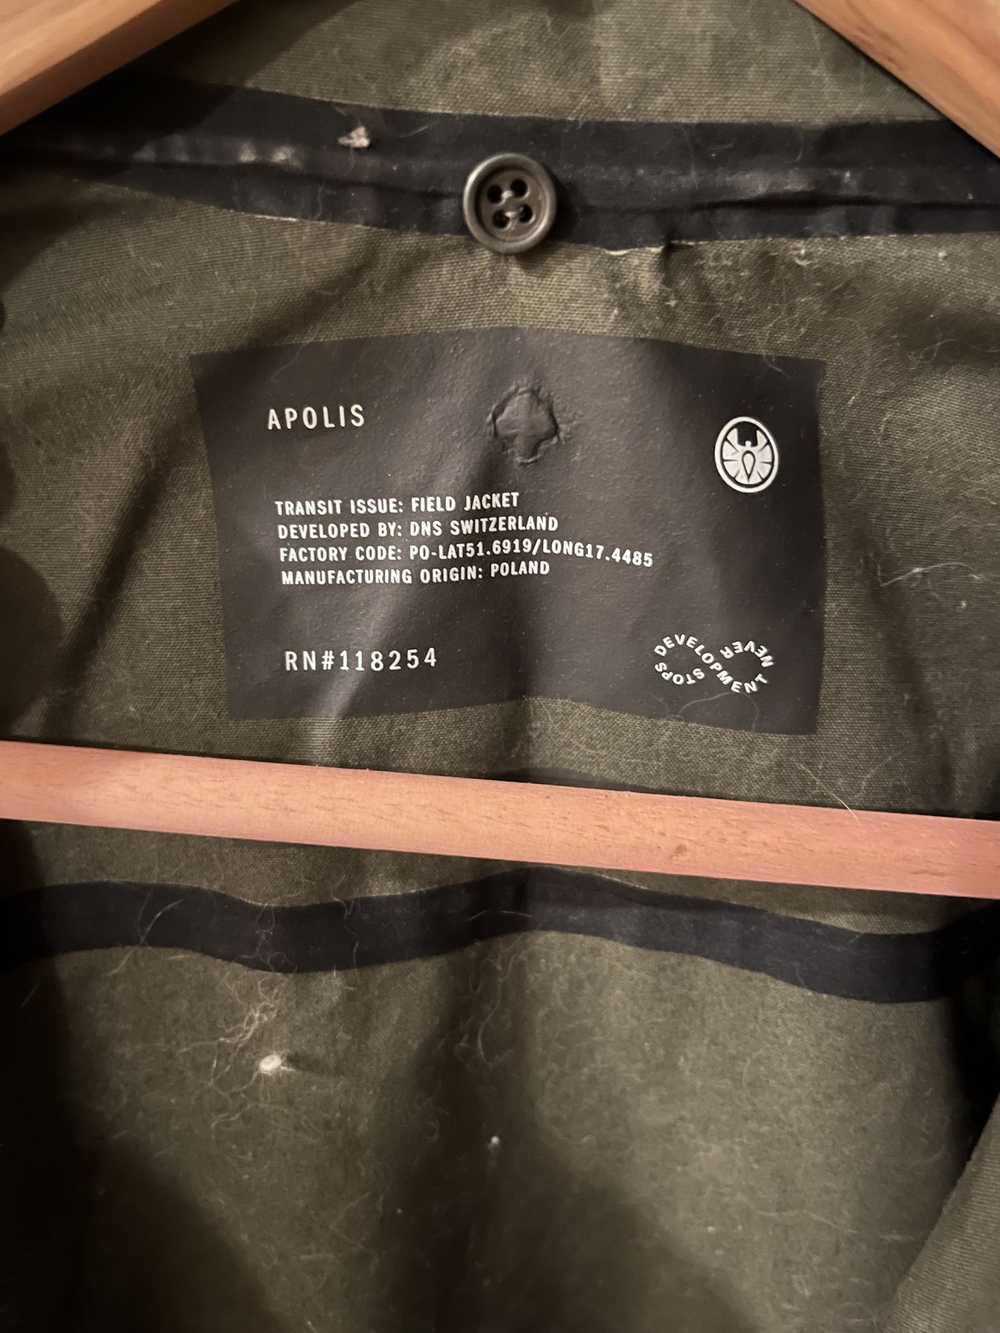 Apolis Transit Issue Field Jacket - image 3